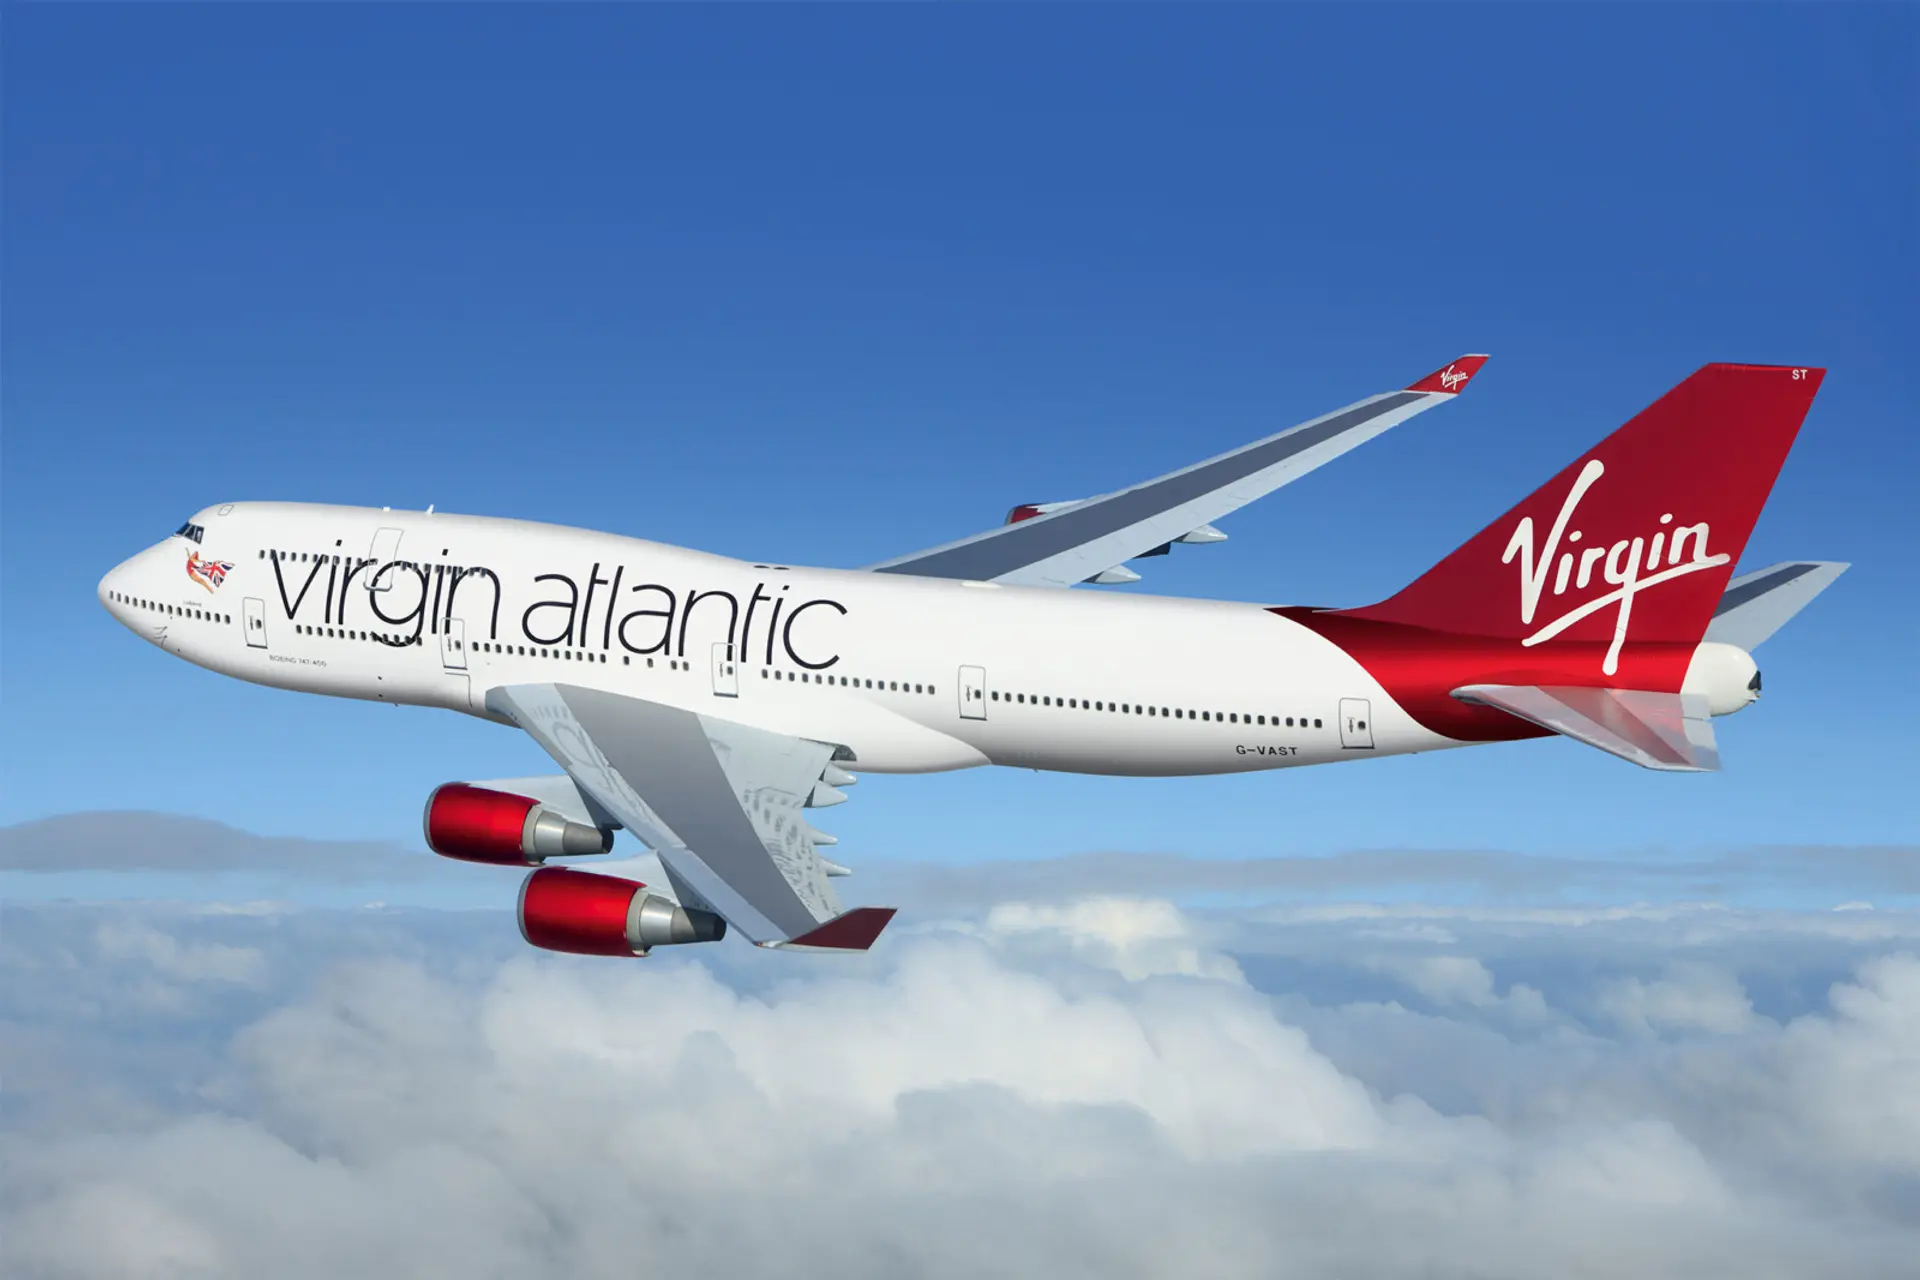 virgin-atlantic-plane2.jpg